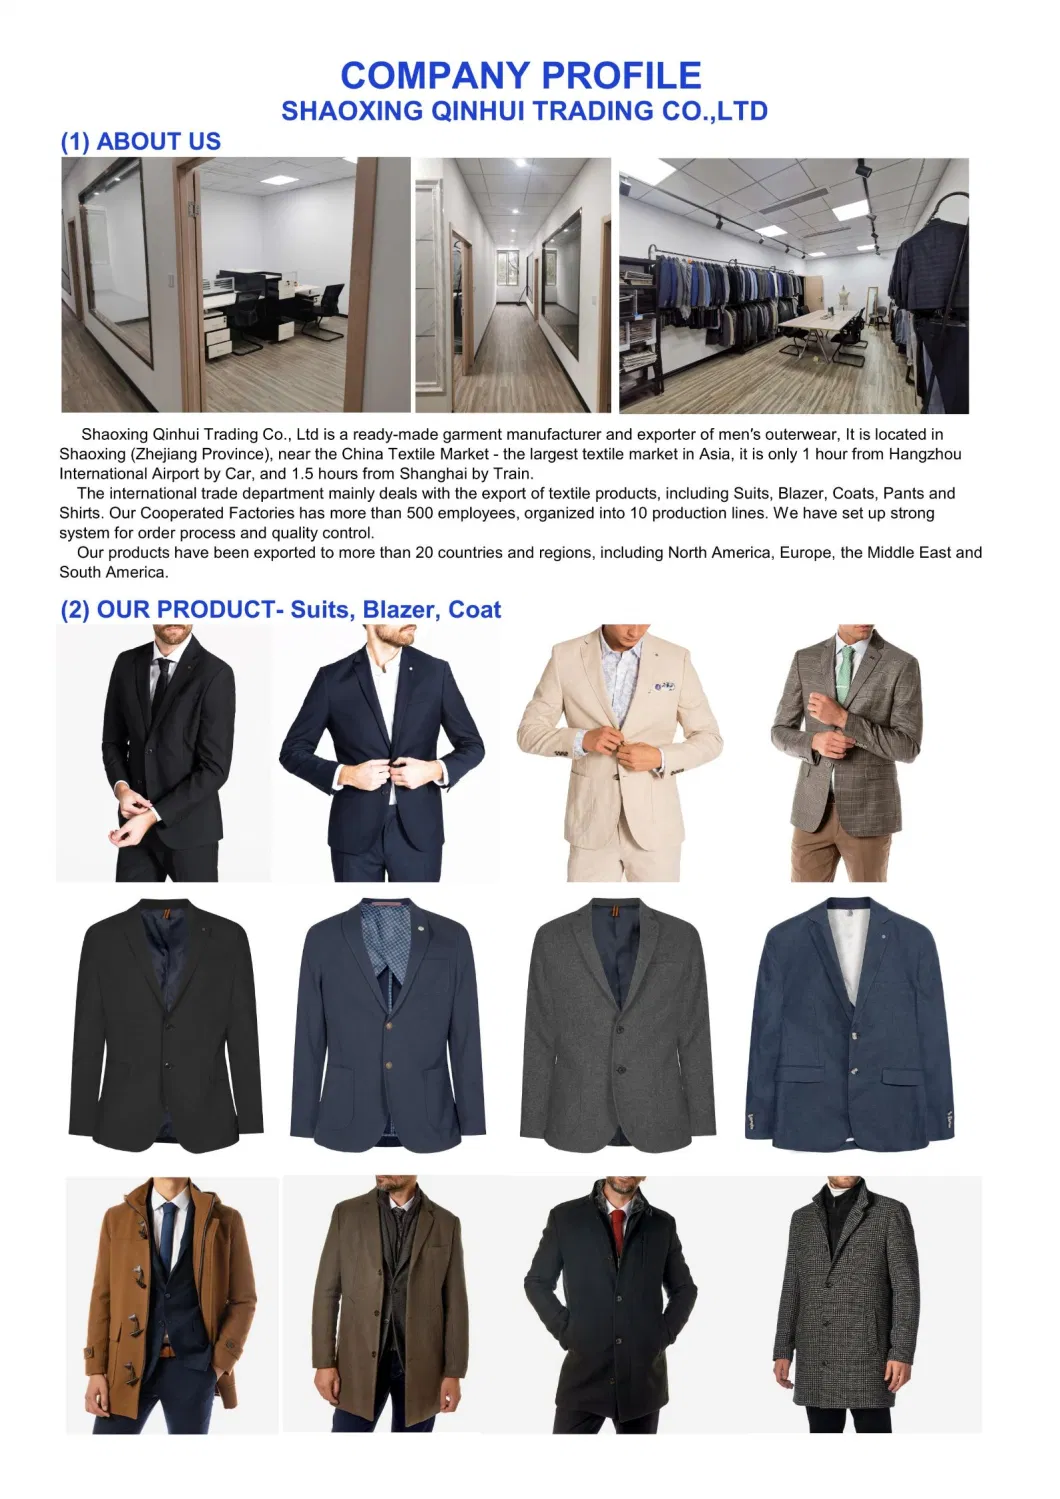 Tailored Fit Signature Textured Sport Coat Suit Jacket Knit Blazer for Men